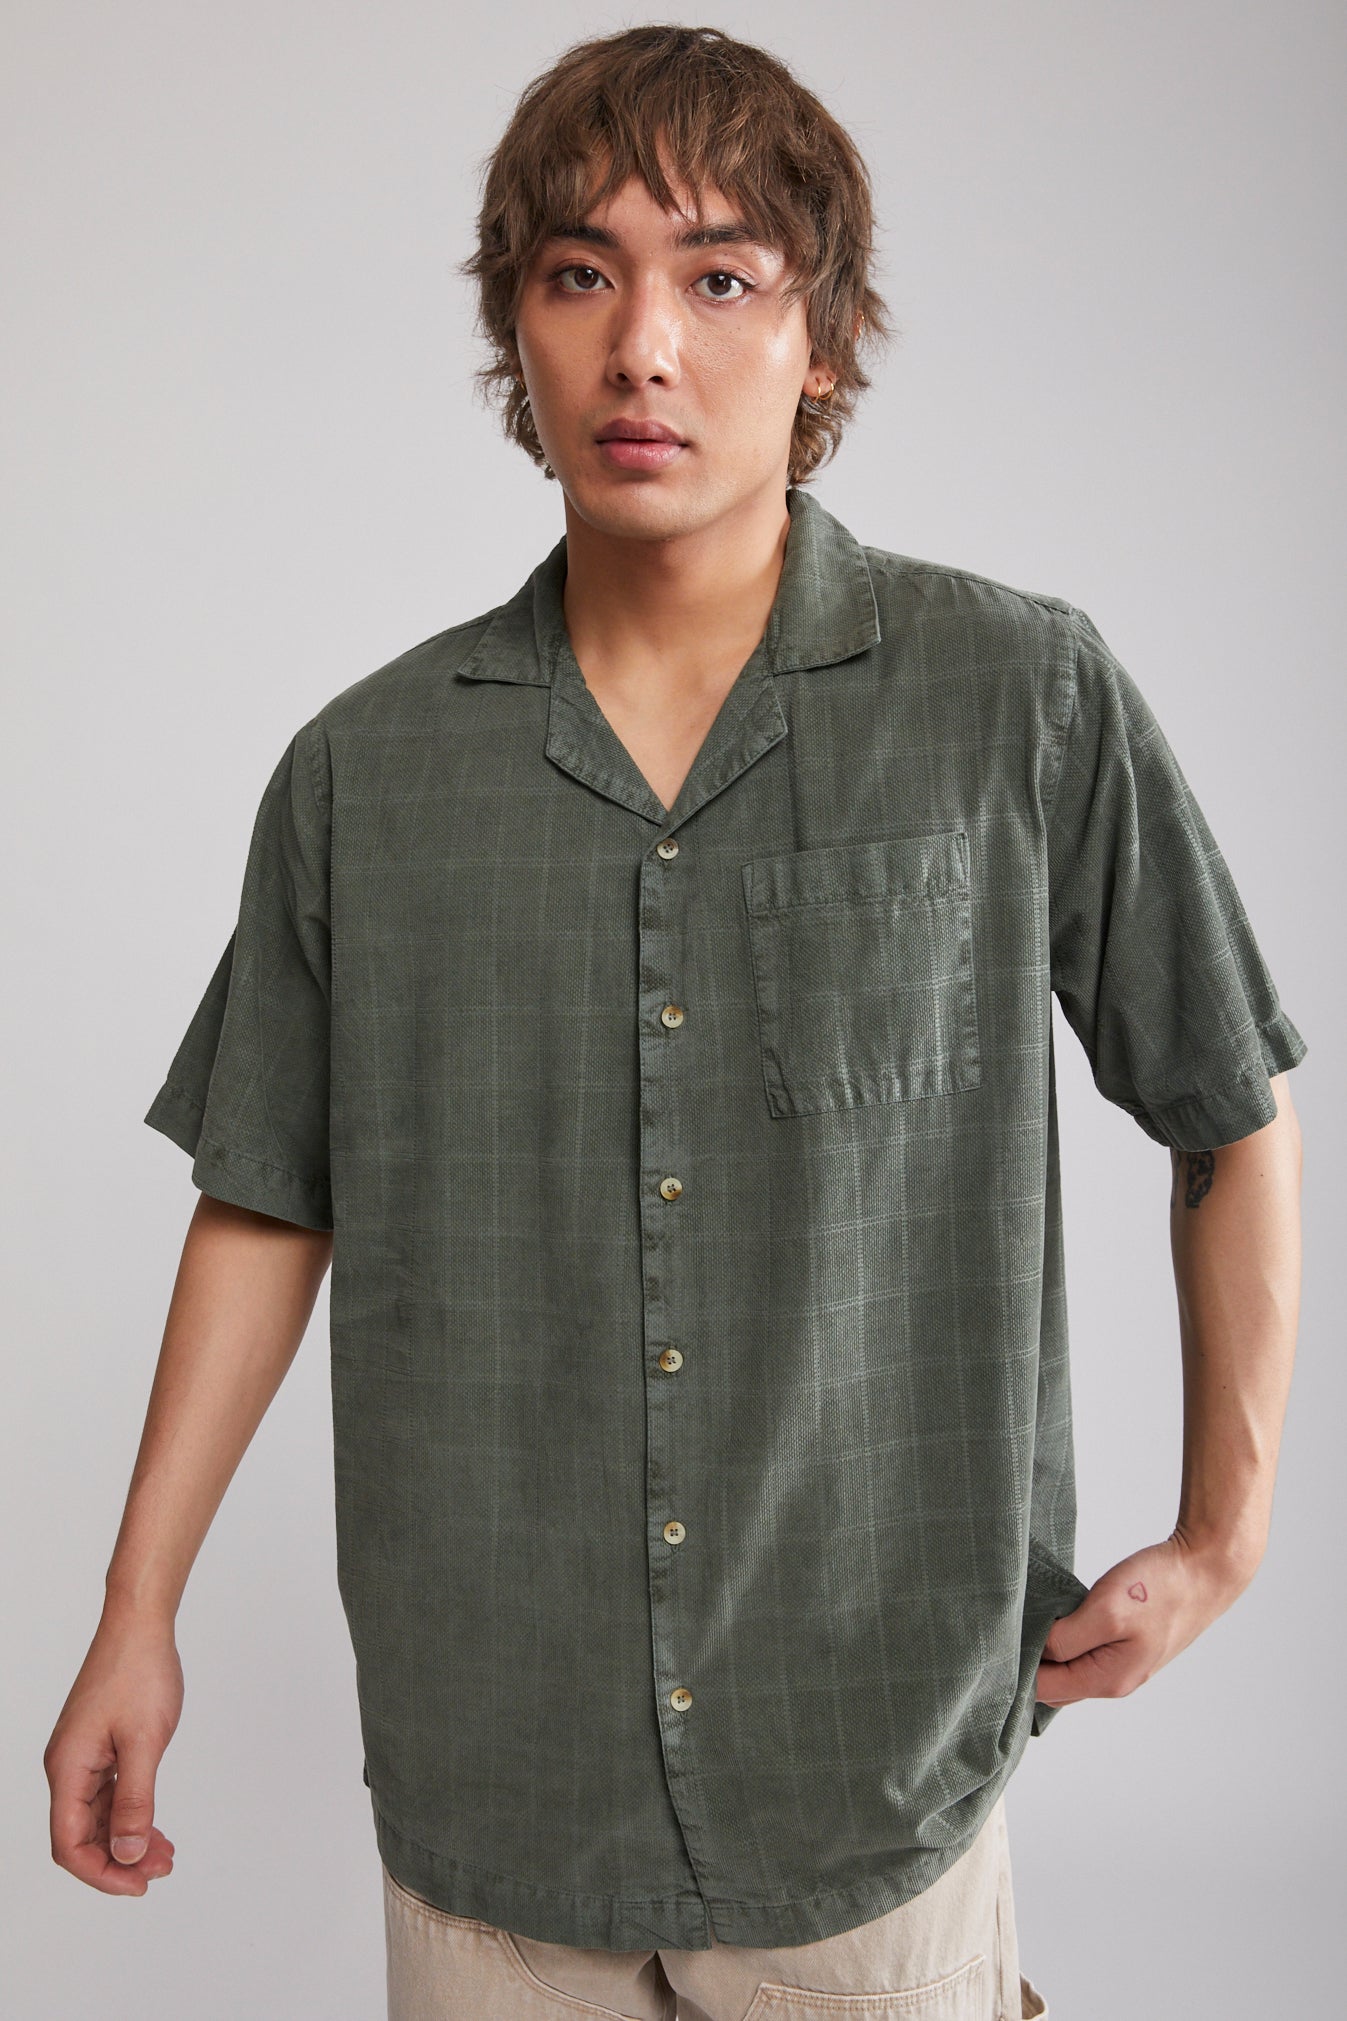 Tile Cord Bowler Shirt | North Beach